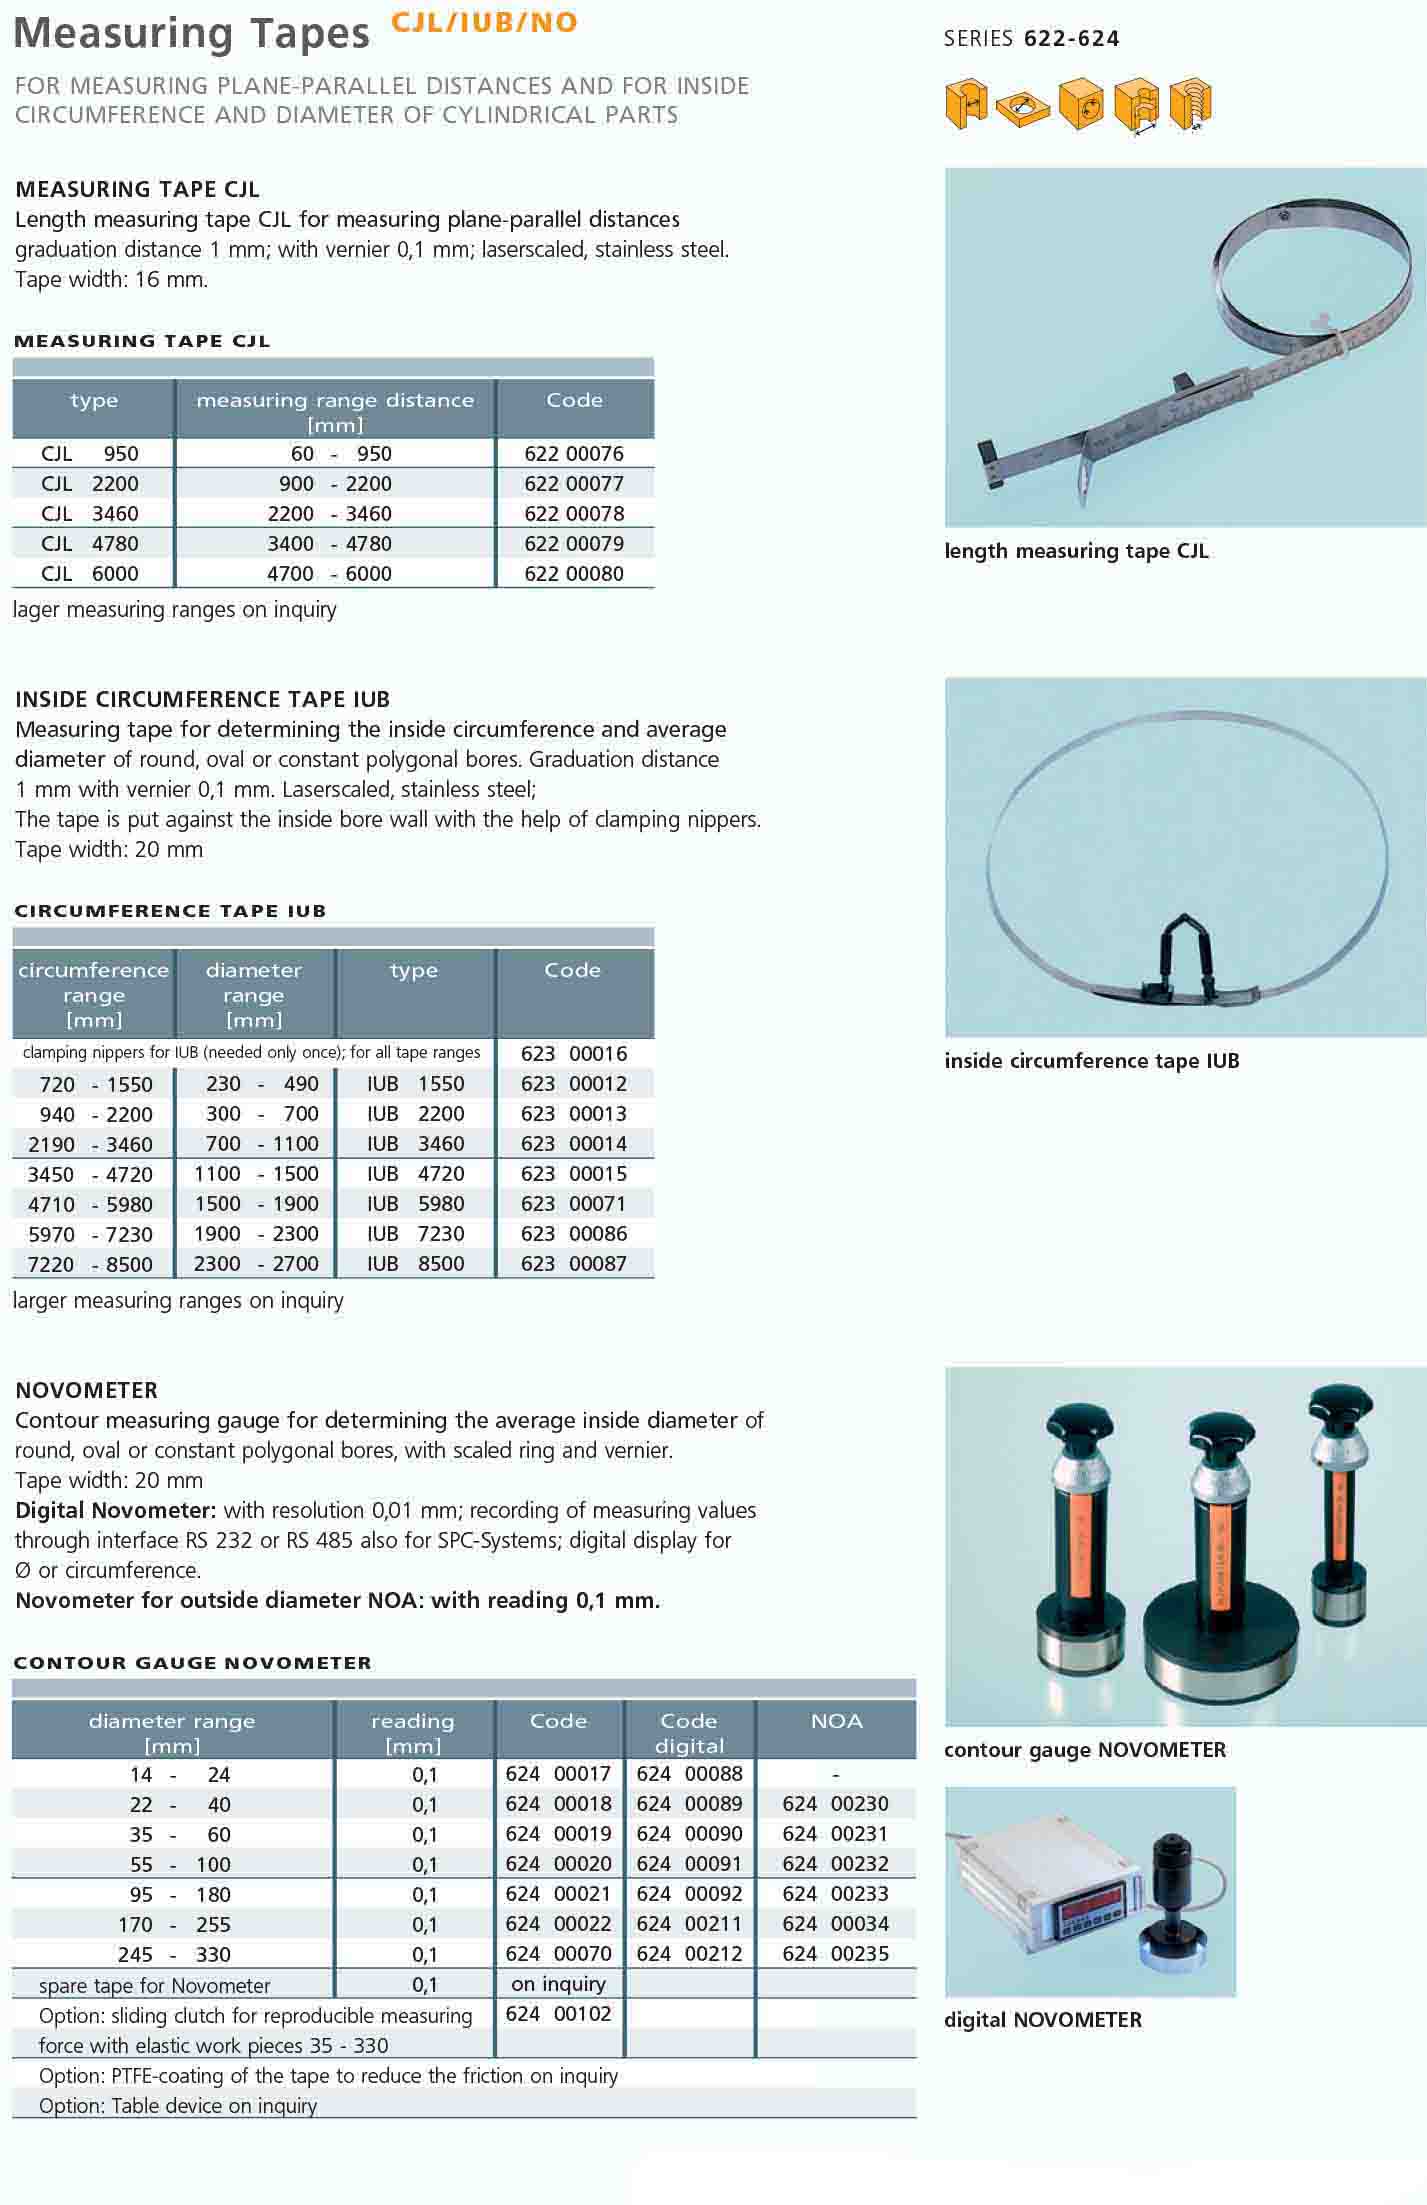 Buy SCHWENK Circumference tape measure